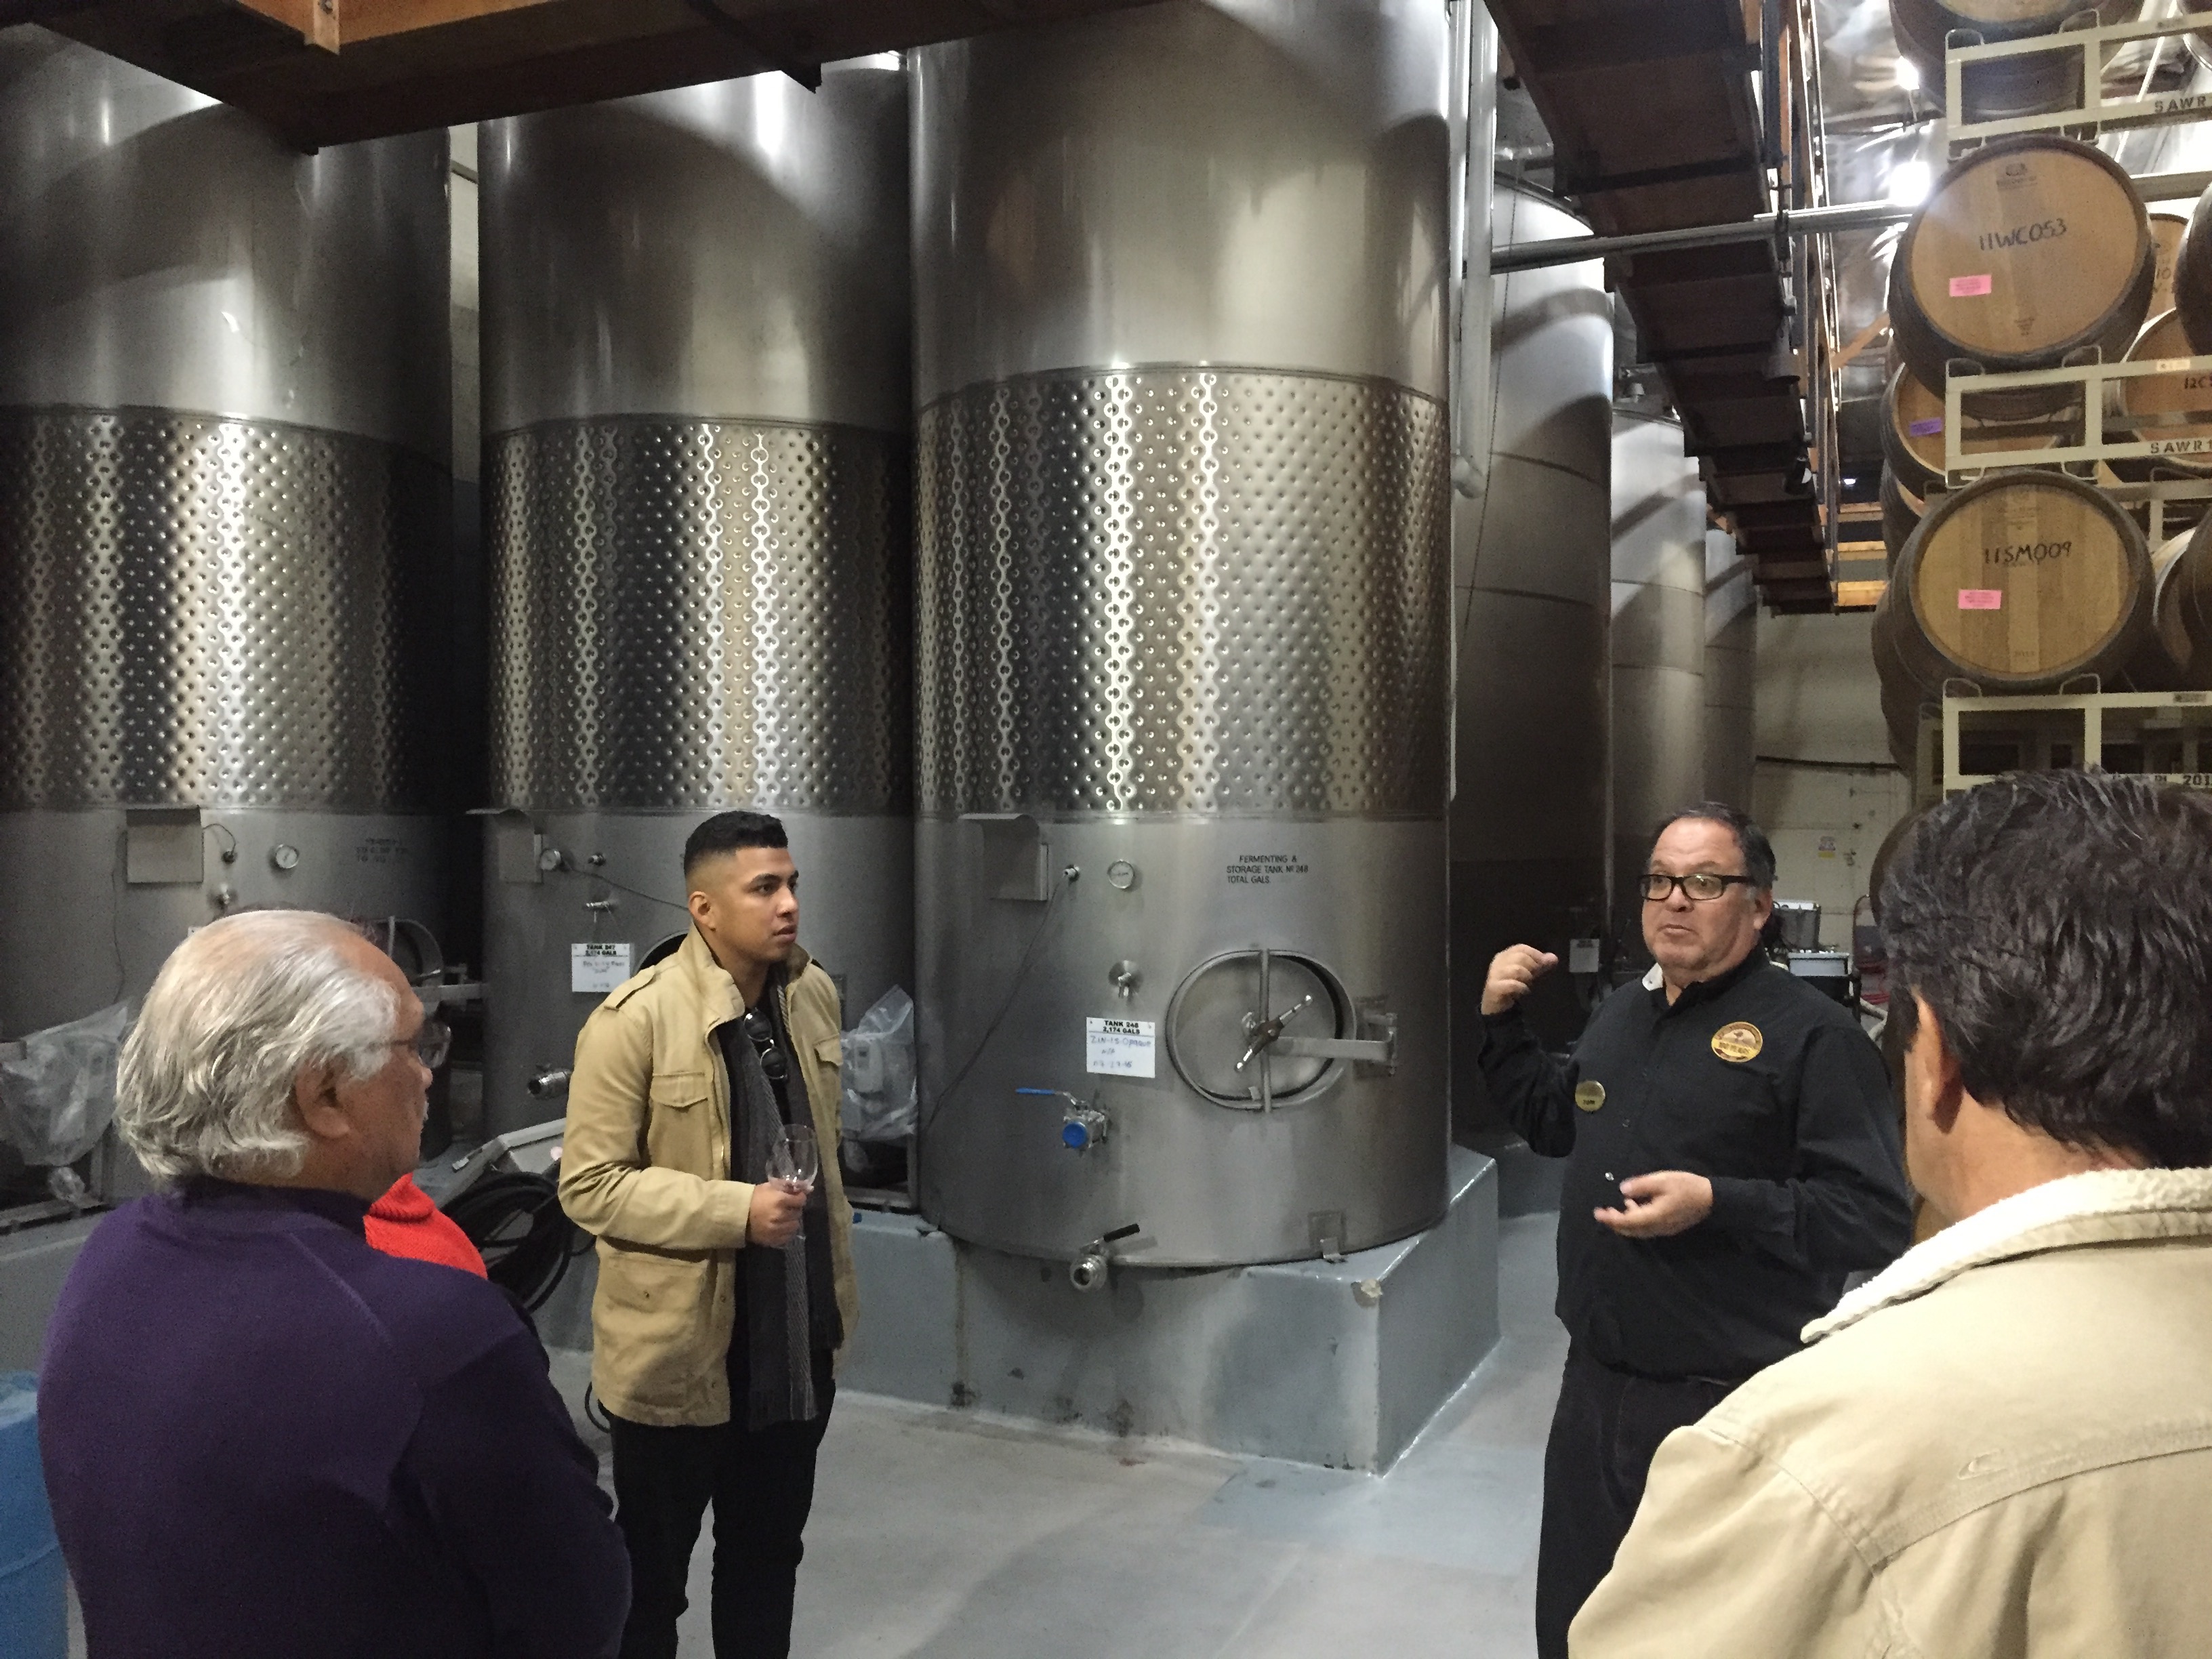 Tour guide Tom Sanchez explains how wine is made